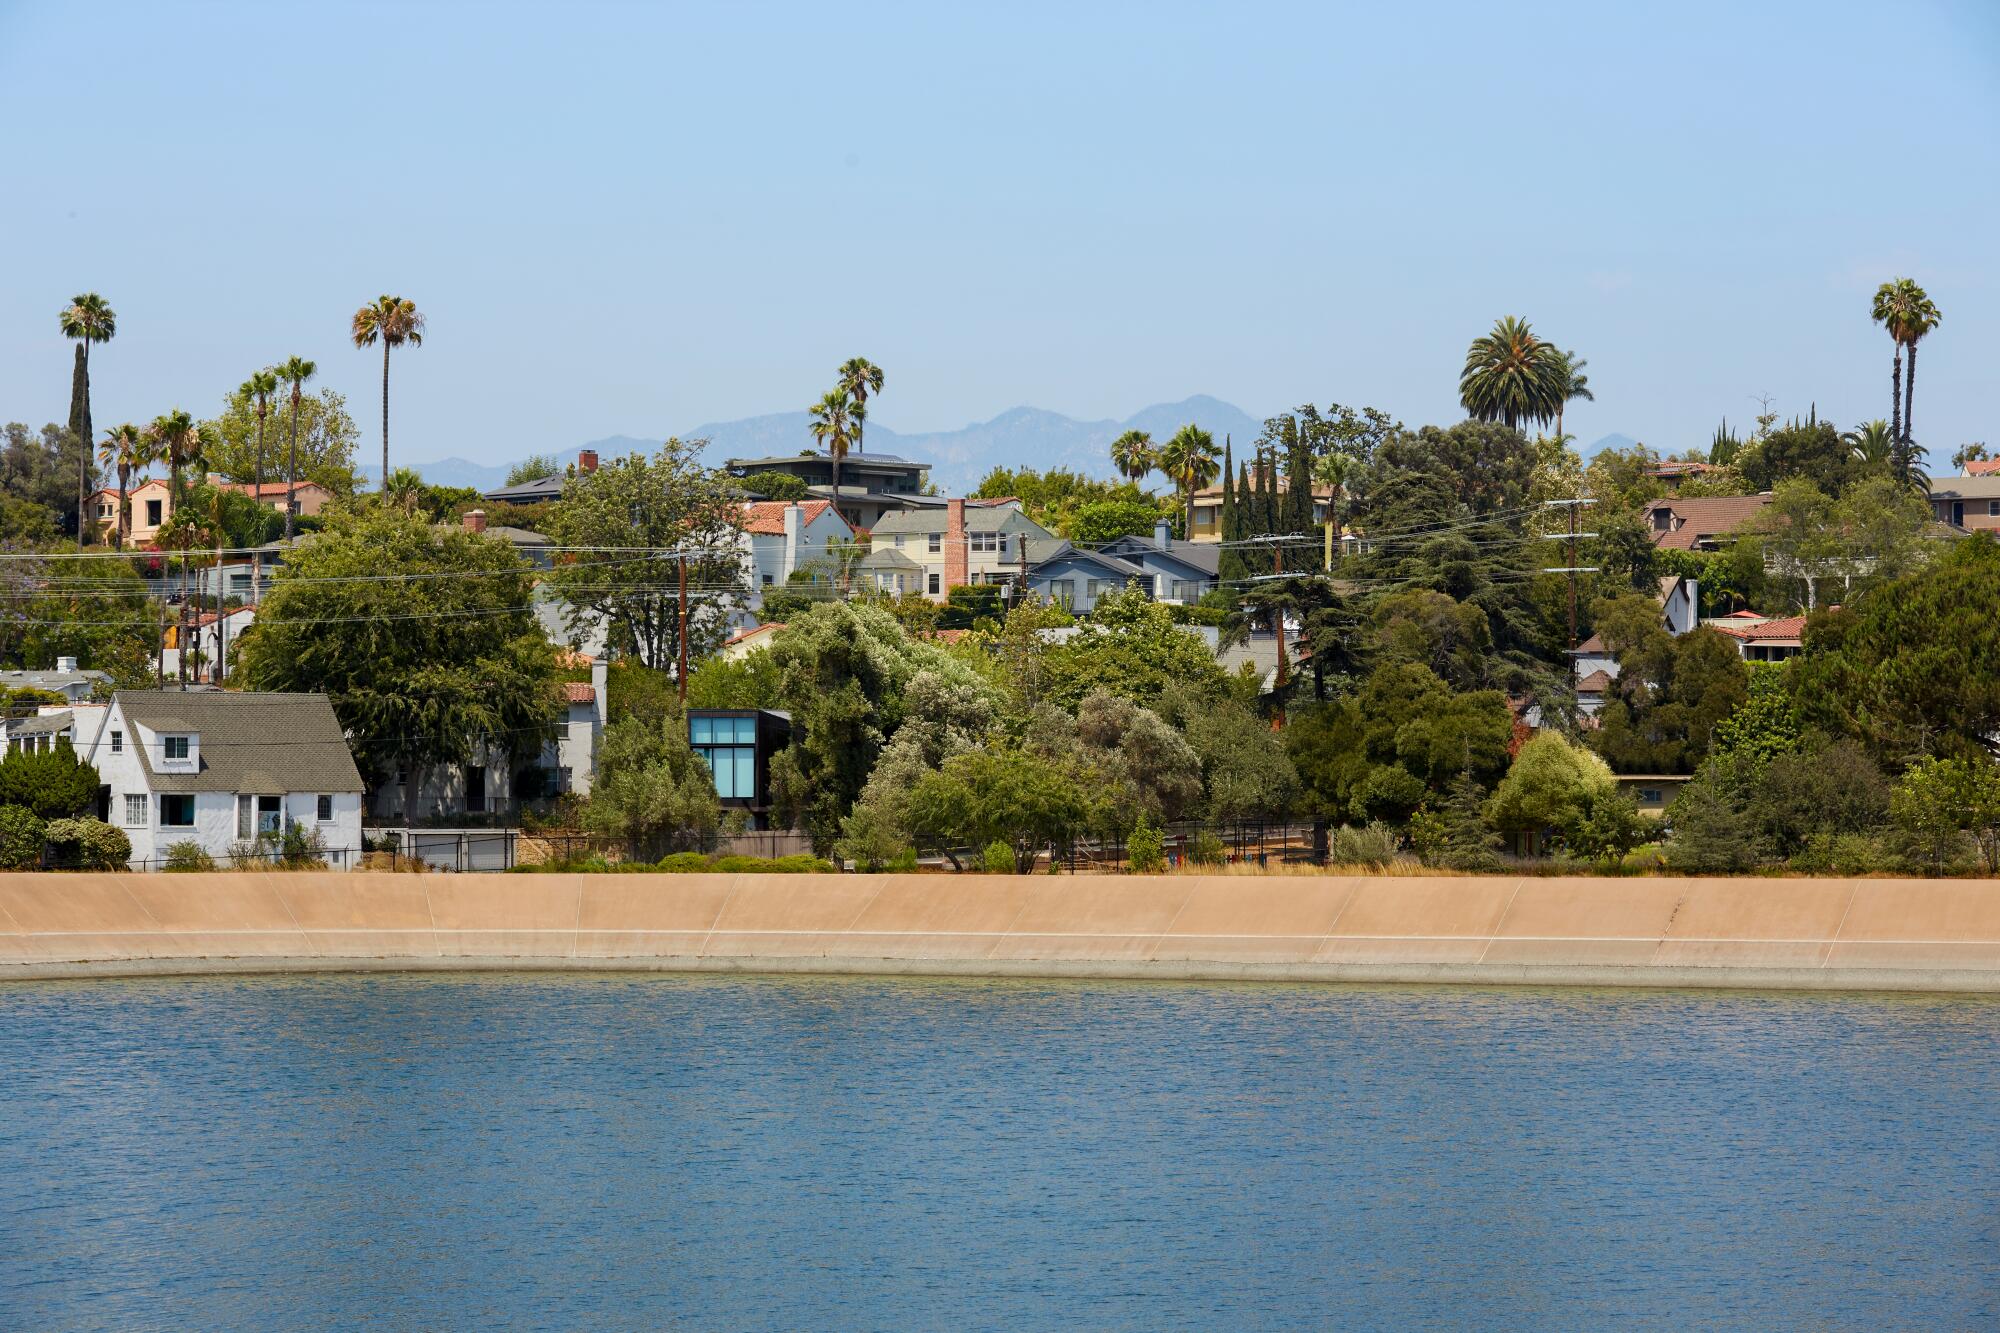 The Ivanhoe Vista House, seen as a speck on the suburban landscape, overlooks a reservoir